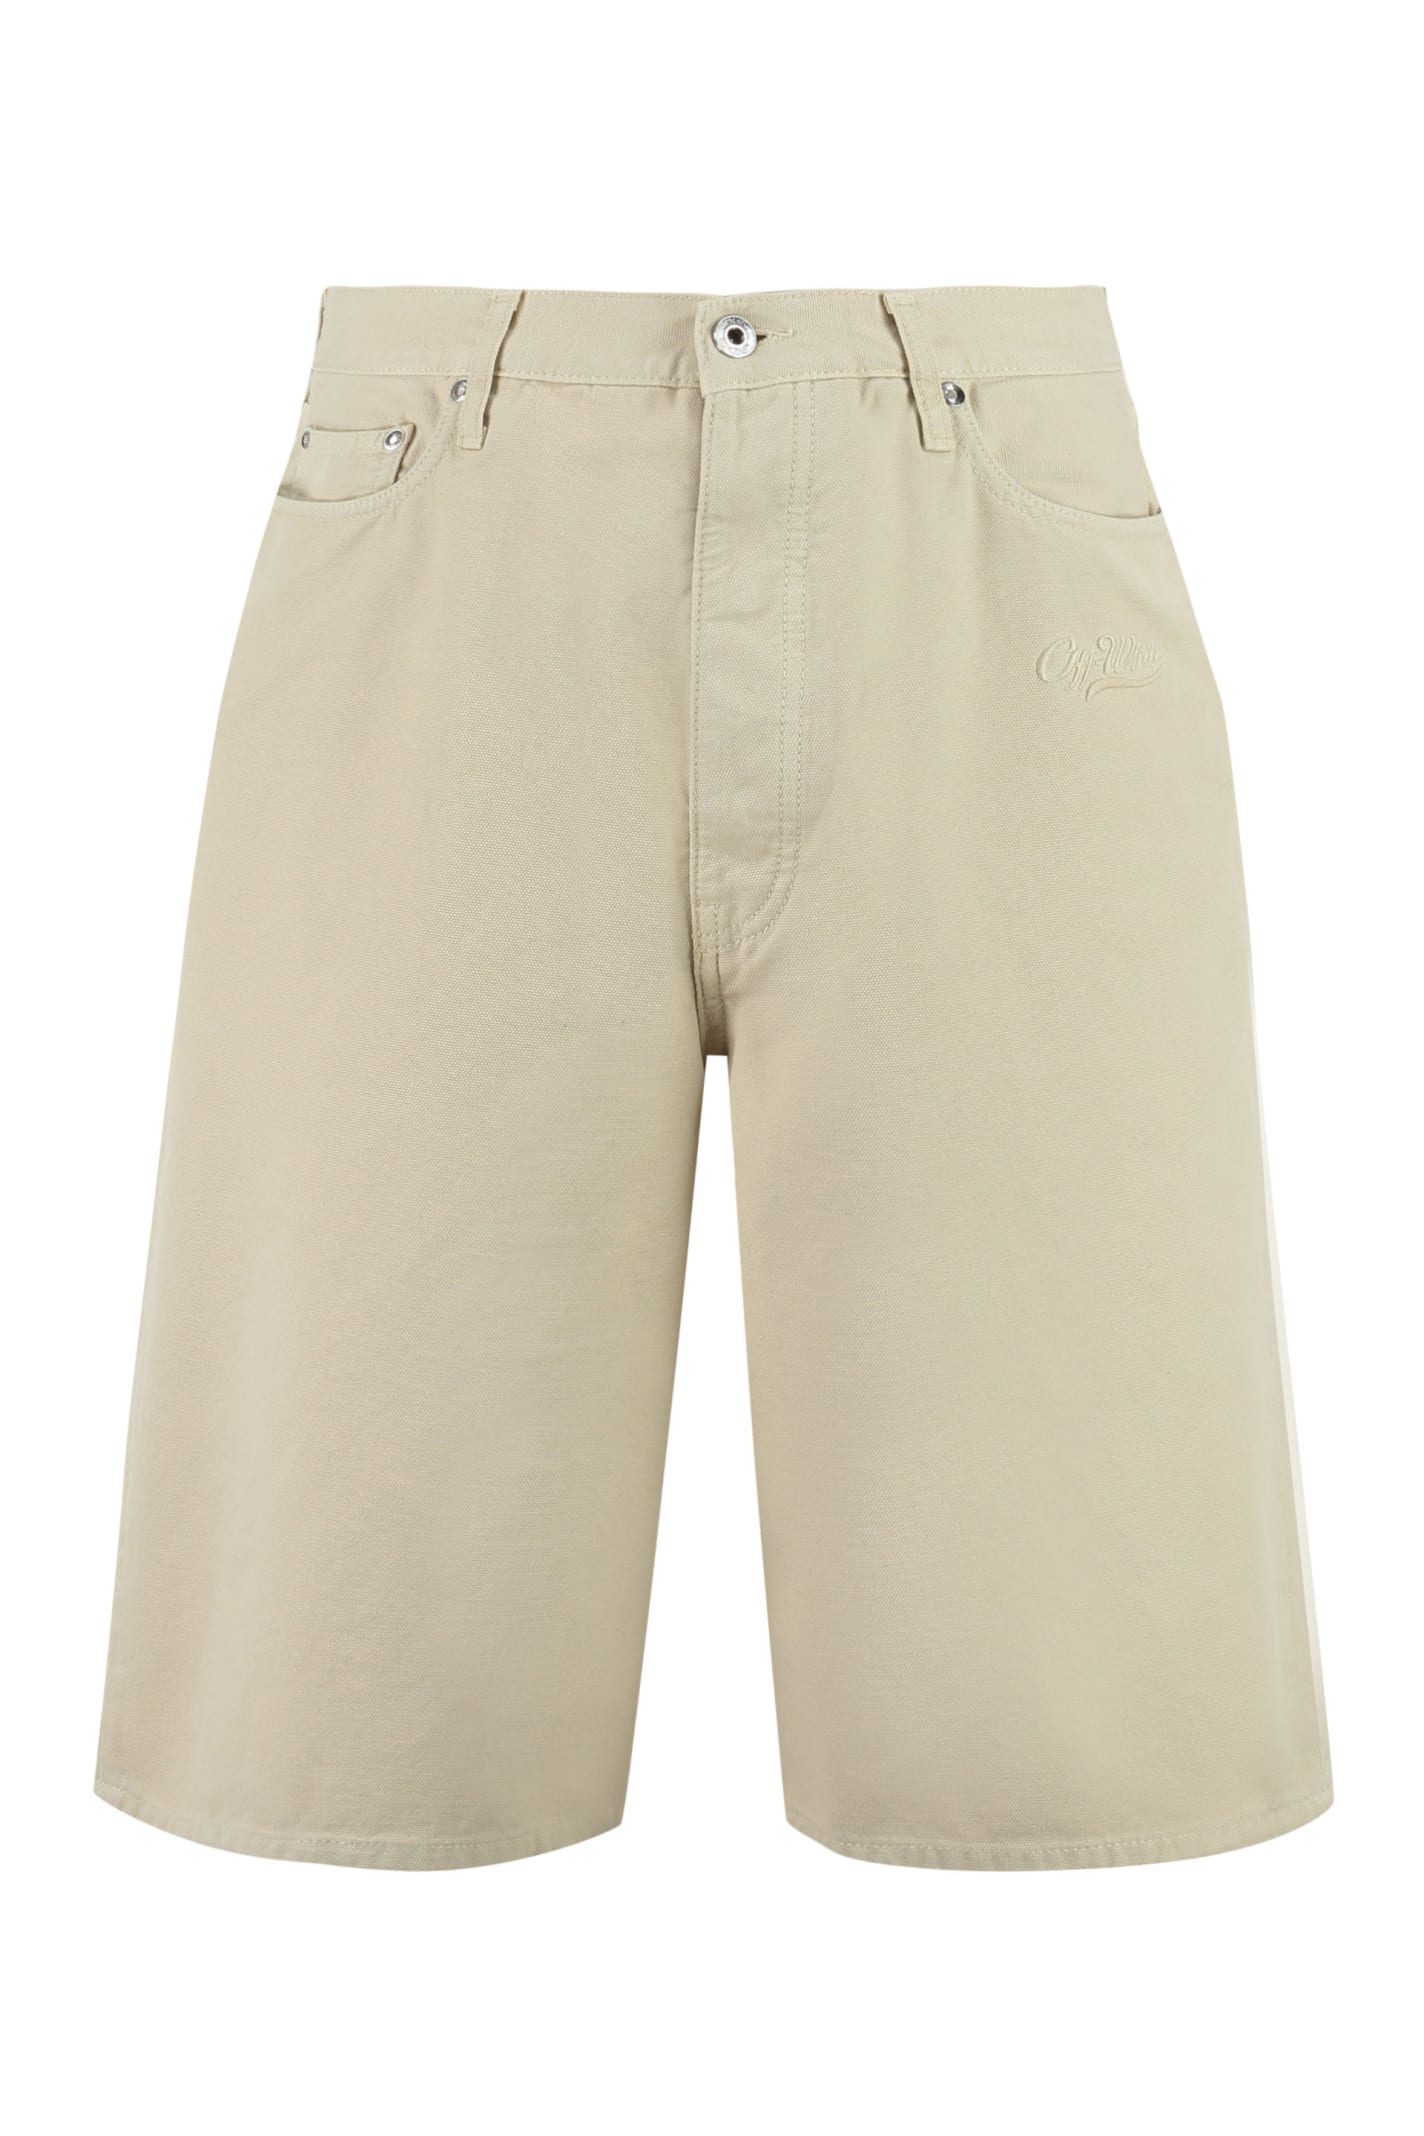 Off-White Cotton Bermuda Shorts